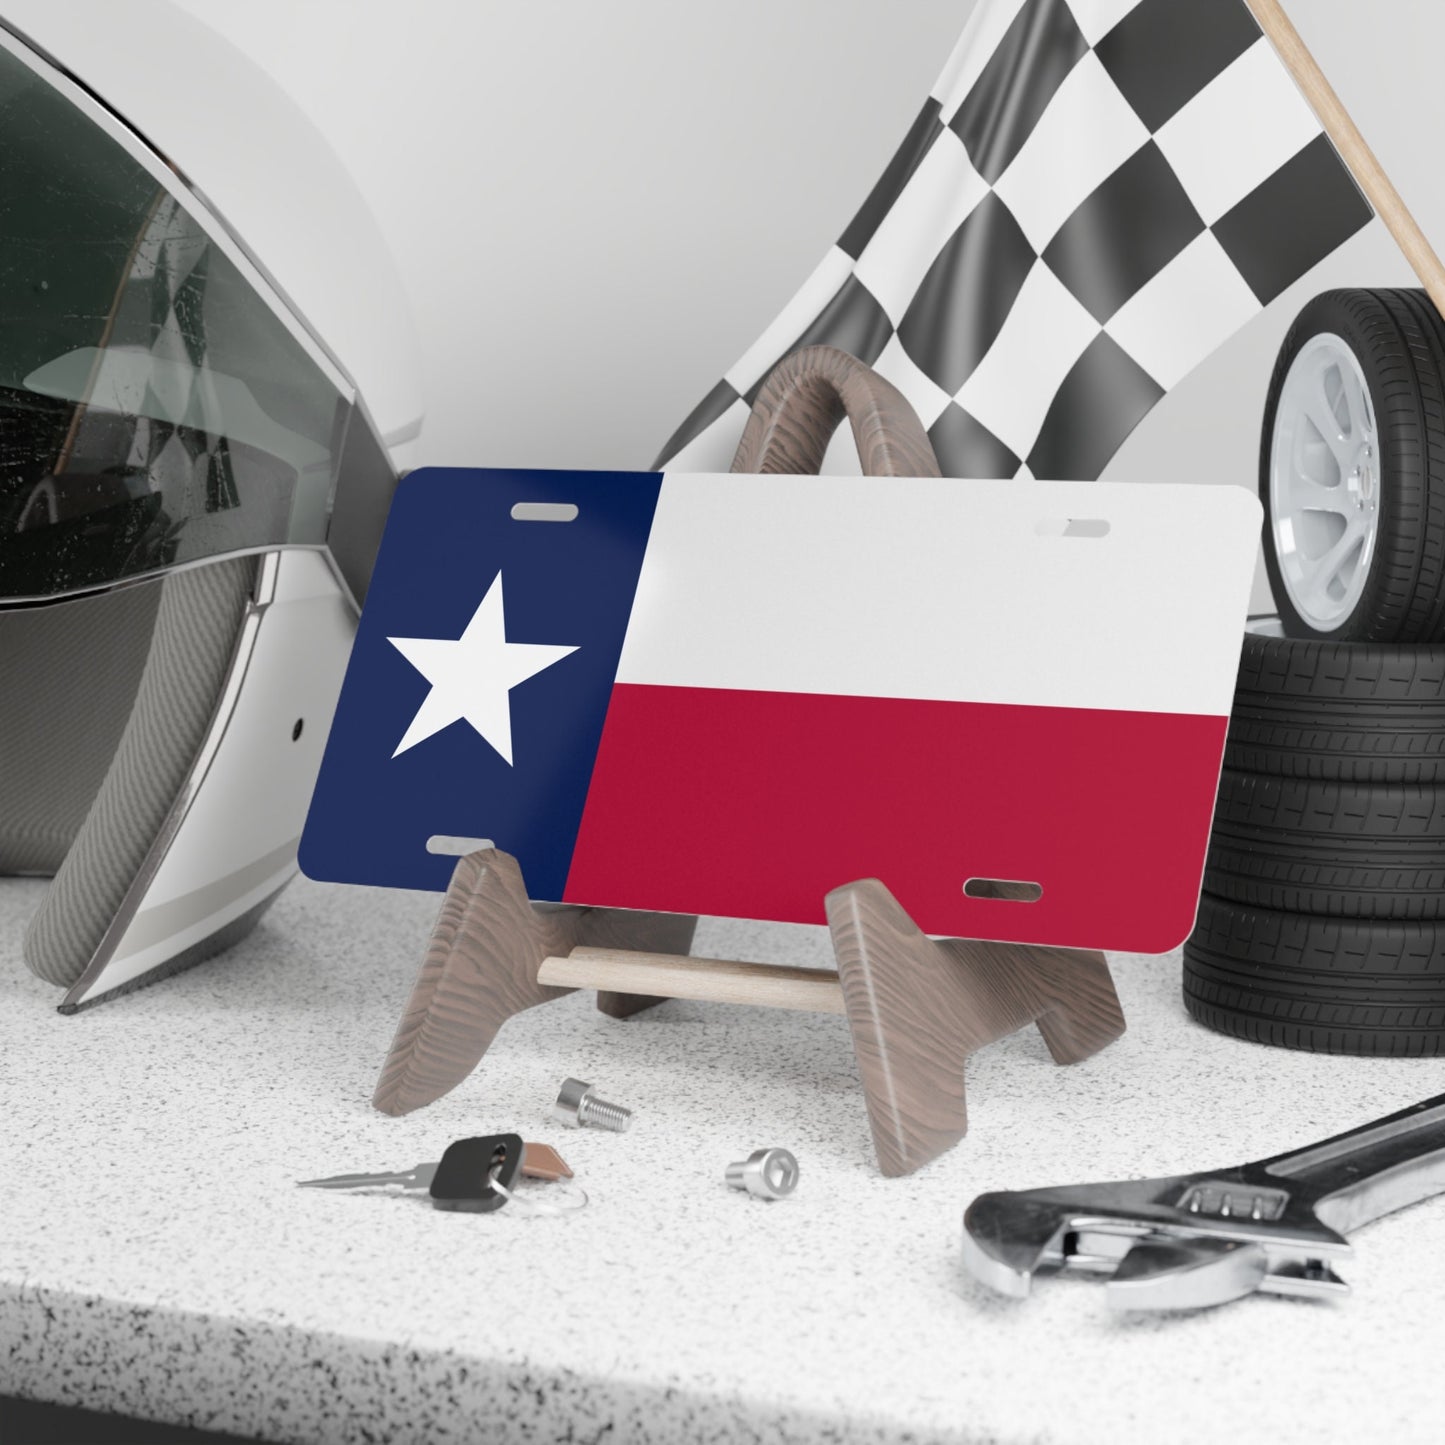 Texas Flag Car Plate tag